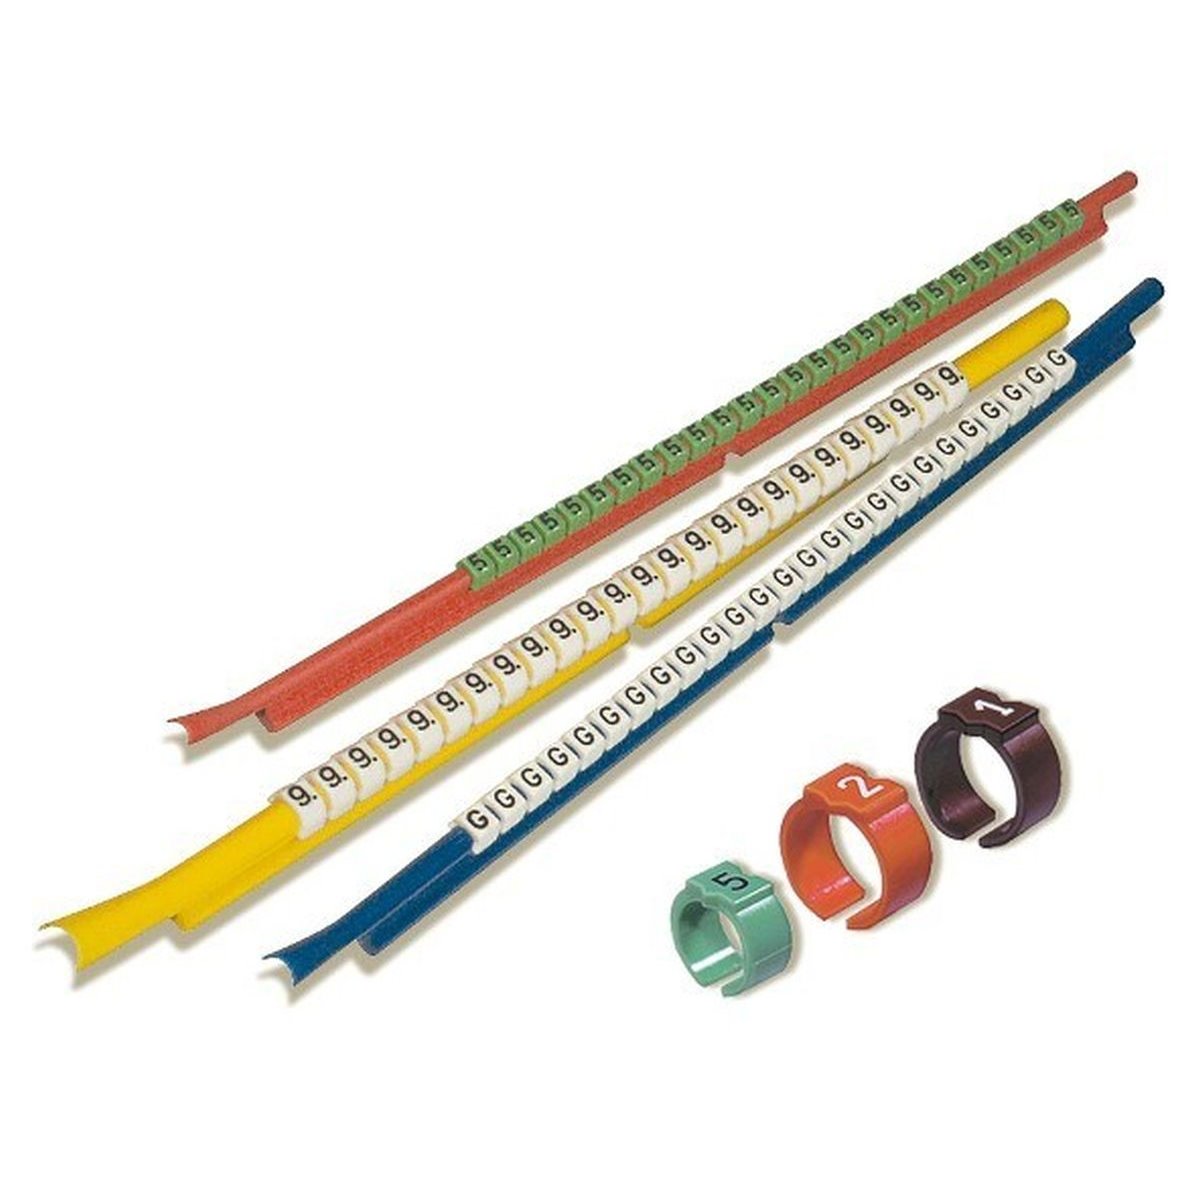 Cable marker PLIOSNAP+ PS-09 ''9'' WH 300pcs. SES-Sterling 037400500019